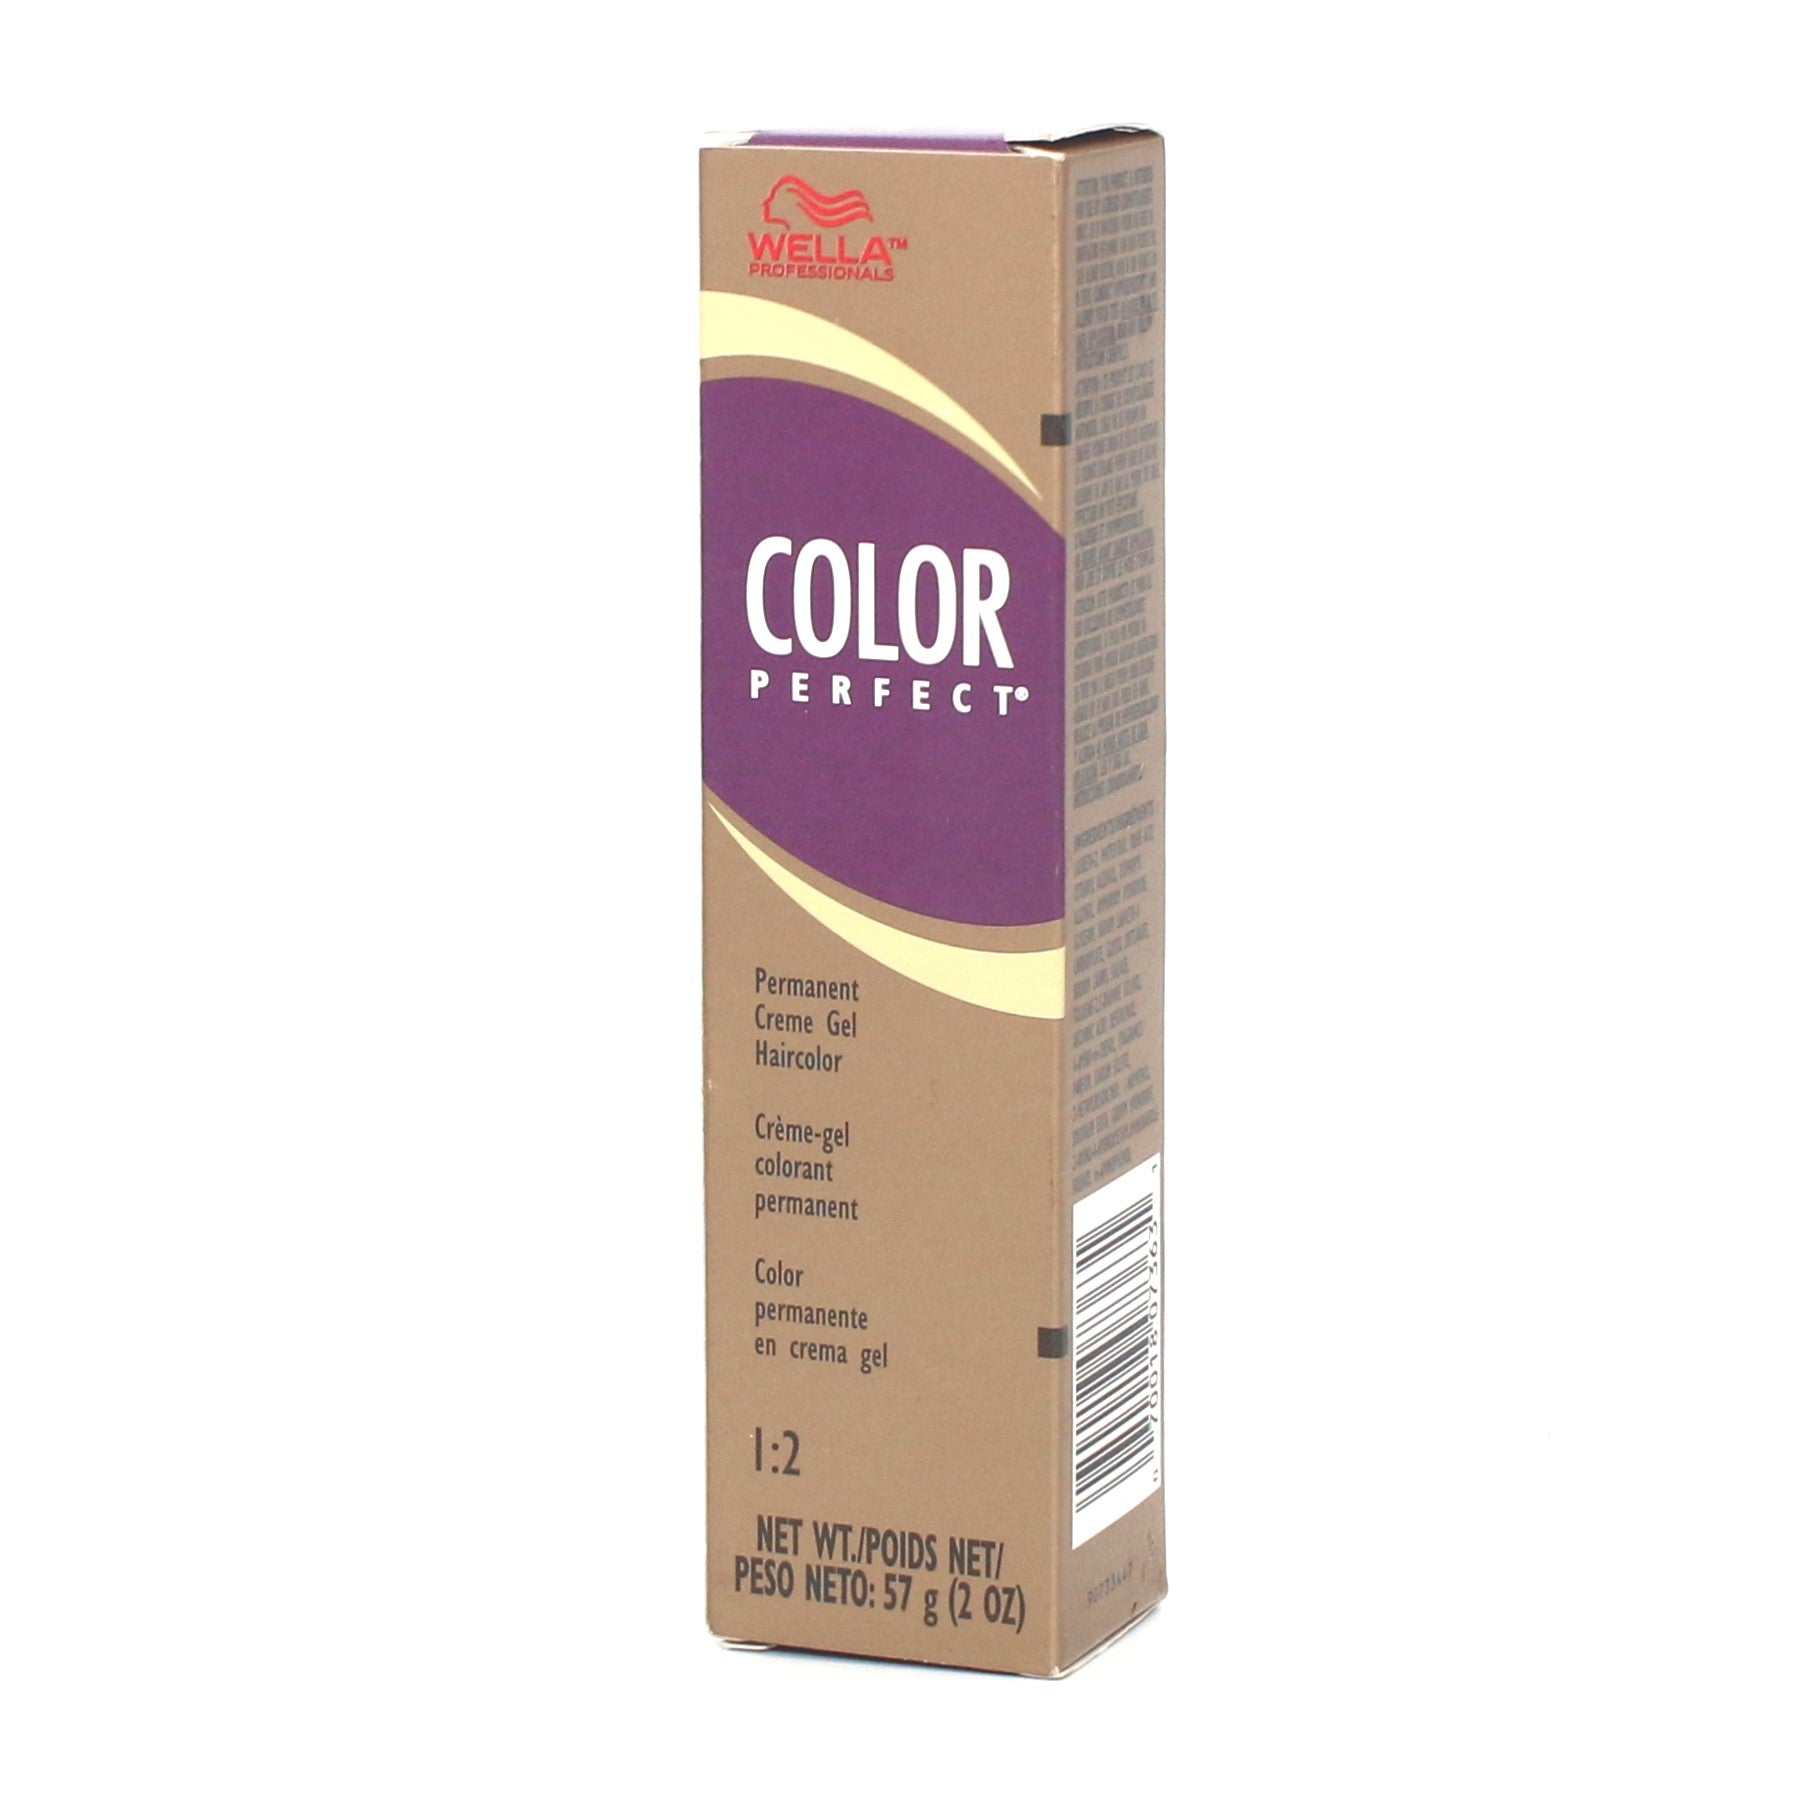 Wella Color Perfect Permanent Creme Gel Haircolor 2 oz